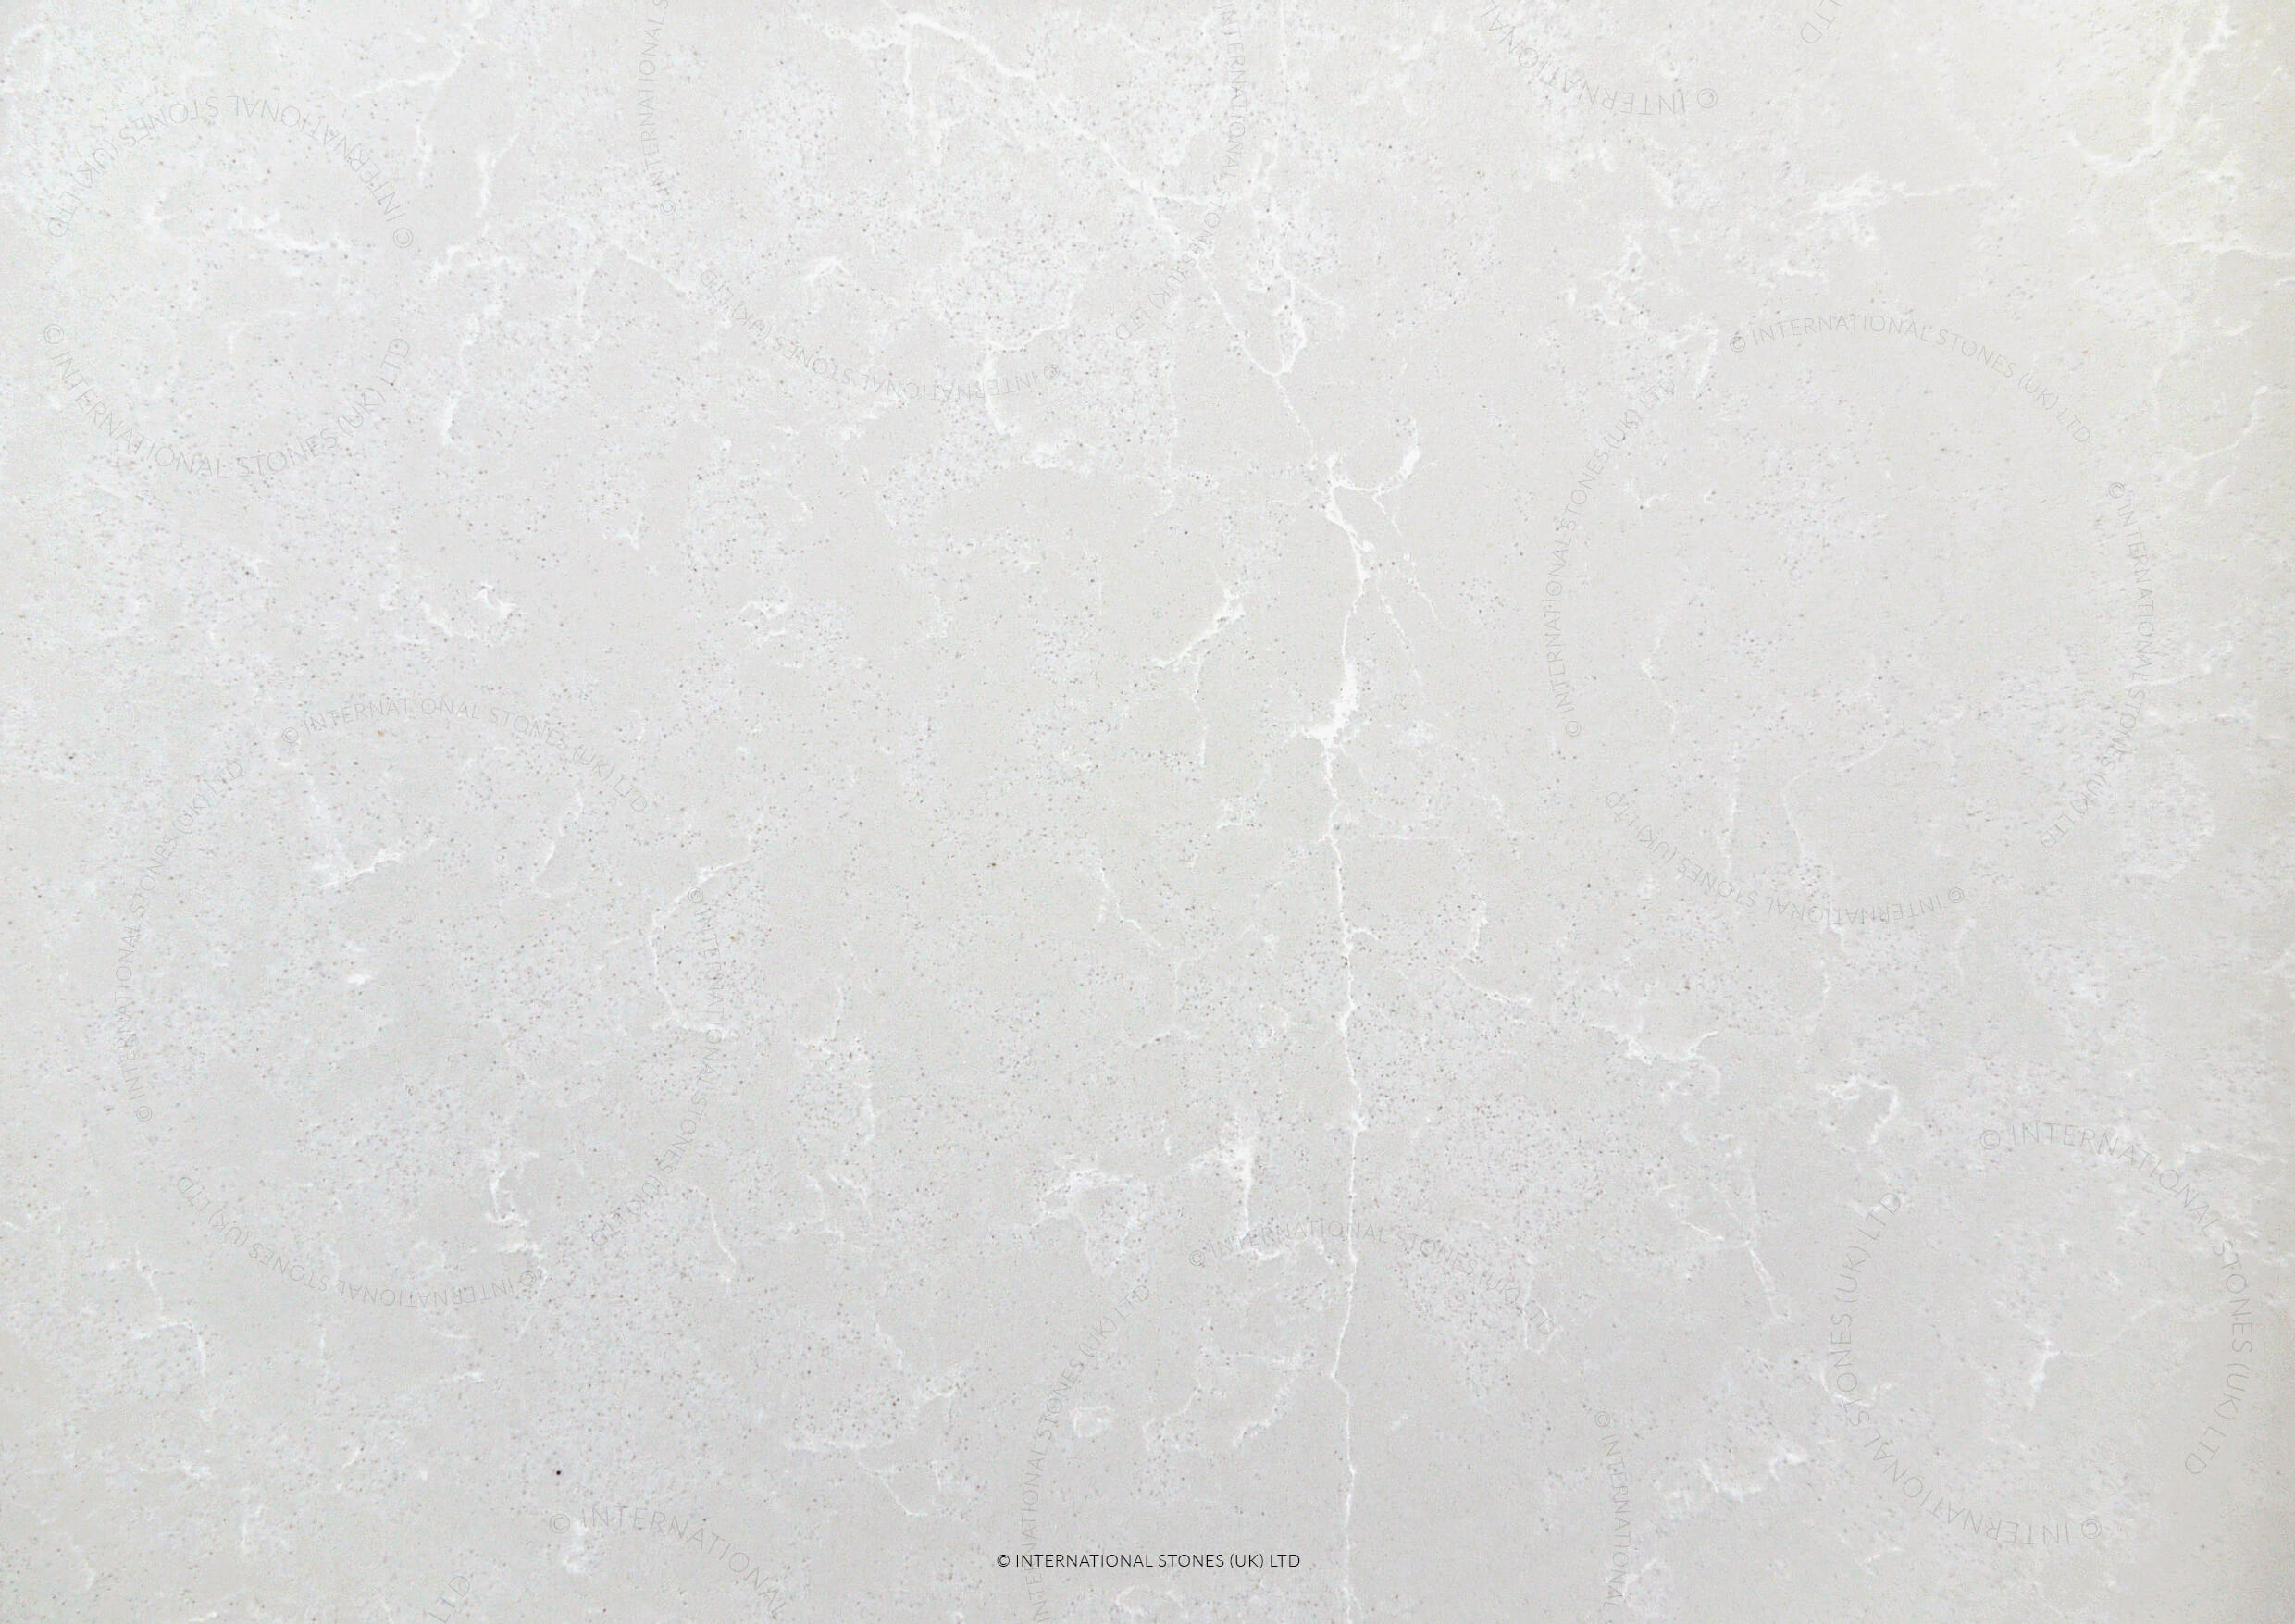 International Stone IQ Desert Silver - worcestershire - Evesham